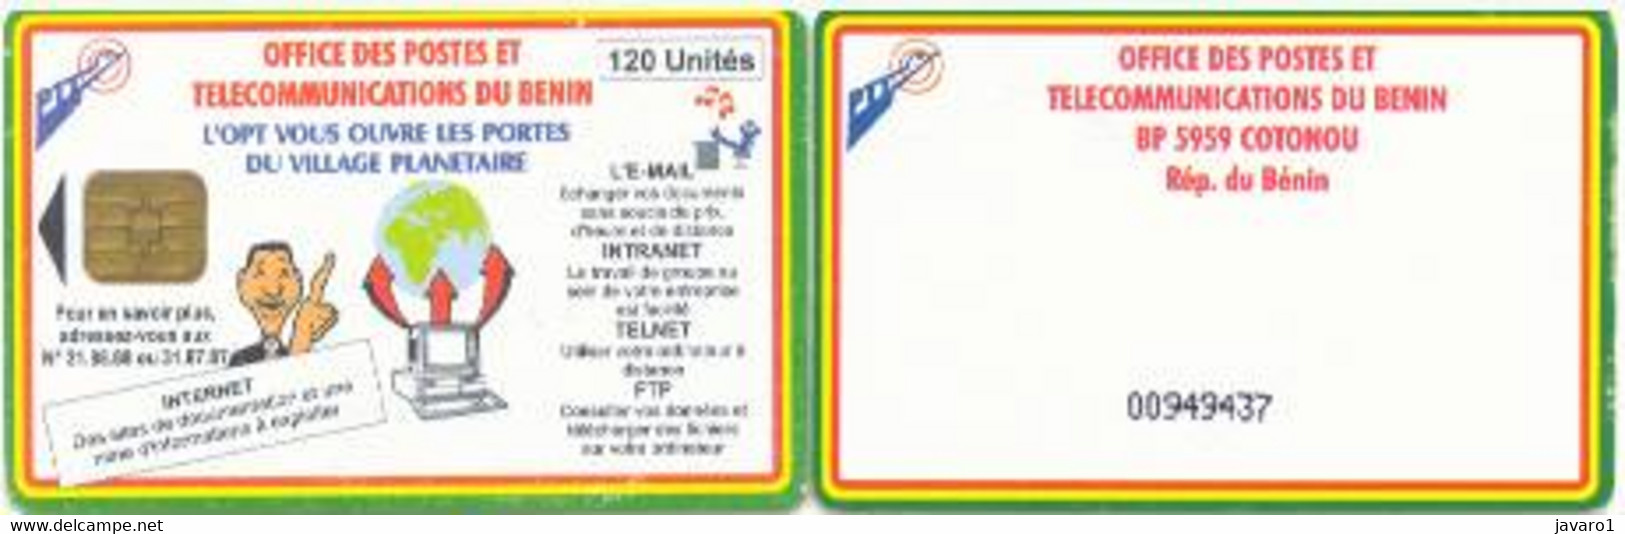 BENIN : BEN29 120u Email,Internet,Telnet,Ftp USED (x) - Benin